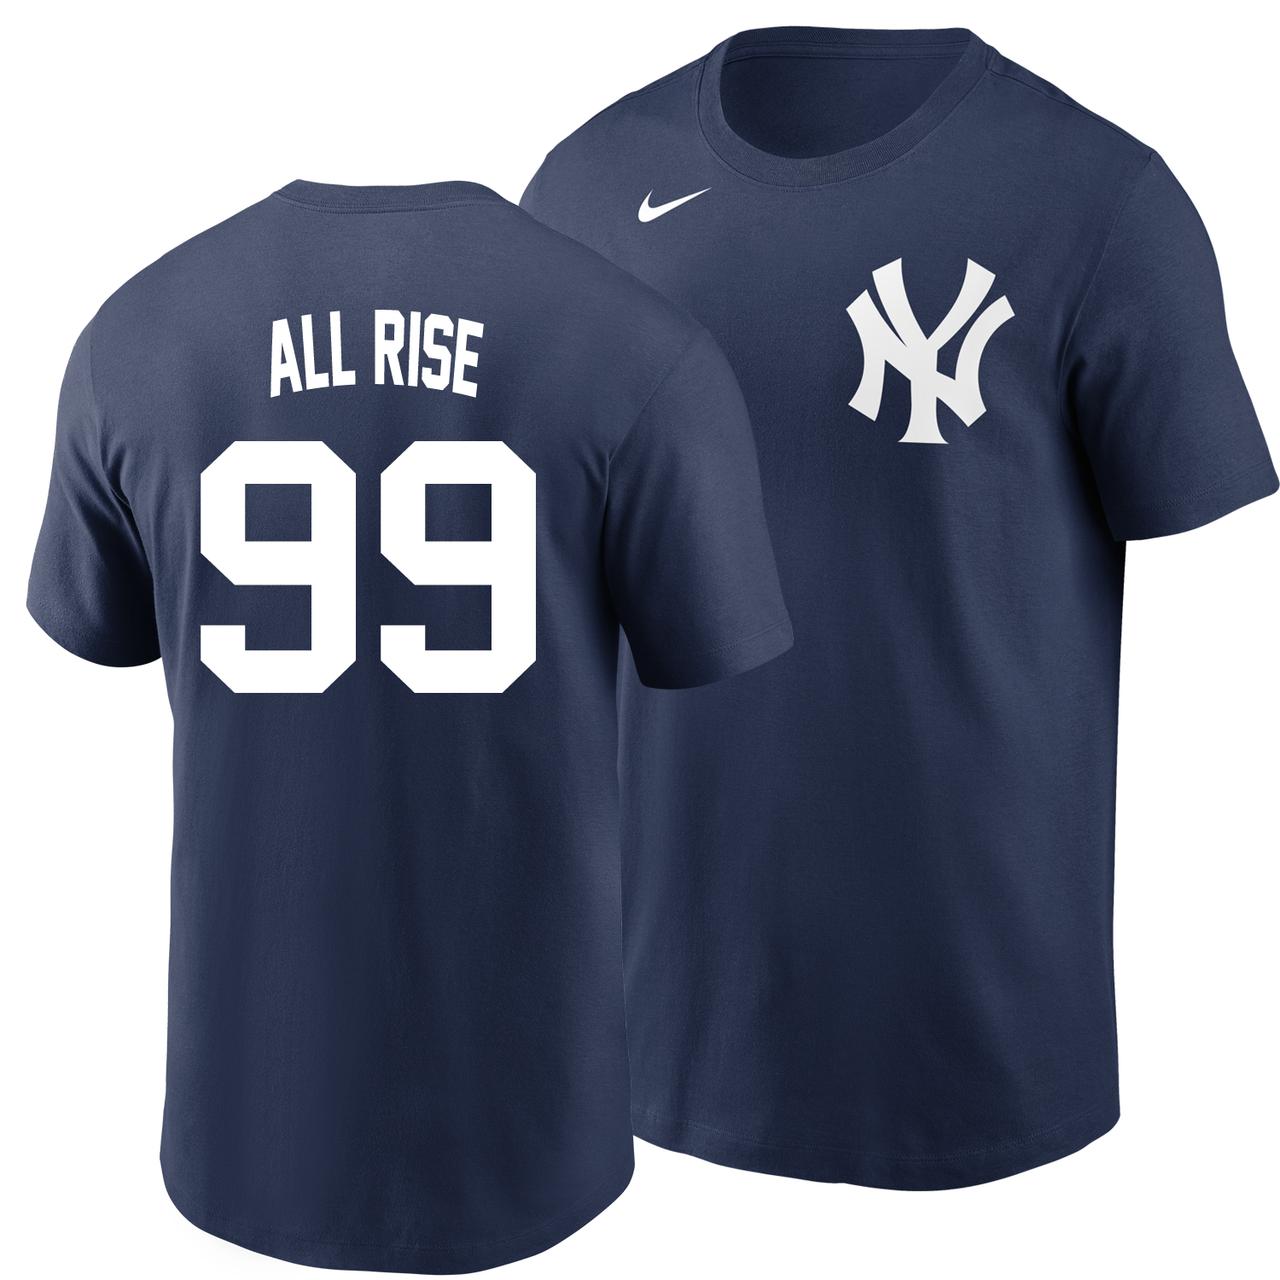 All Rise T-Shirt - Navy Aaron Judge Yankees Adult Nickname T-Shirt